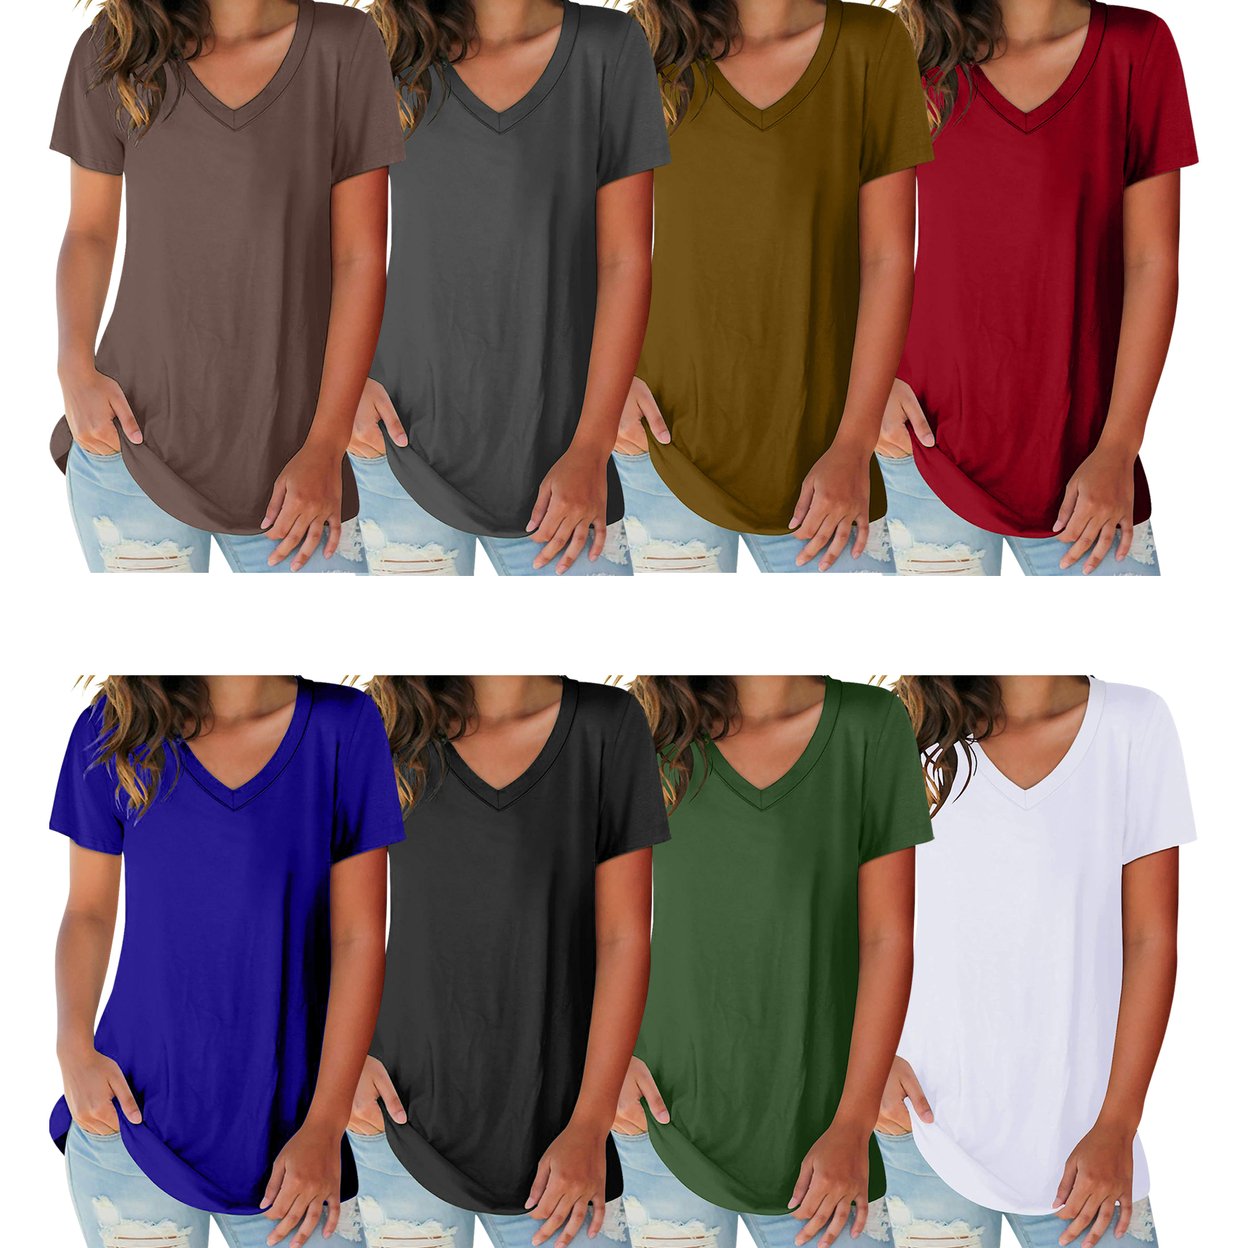 2-Pack: Women's Ultra Soft Smooth Cotton Blend Basic V-Neck Short Sleeve Shirts - Grey & Mustard, Medium